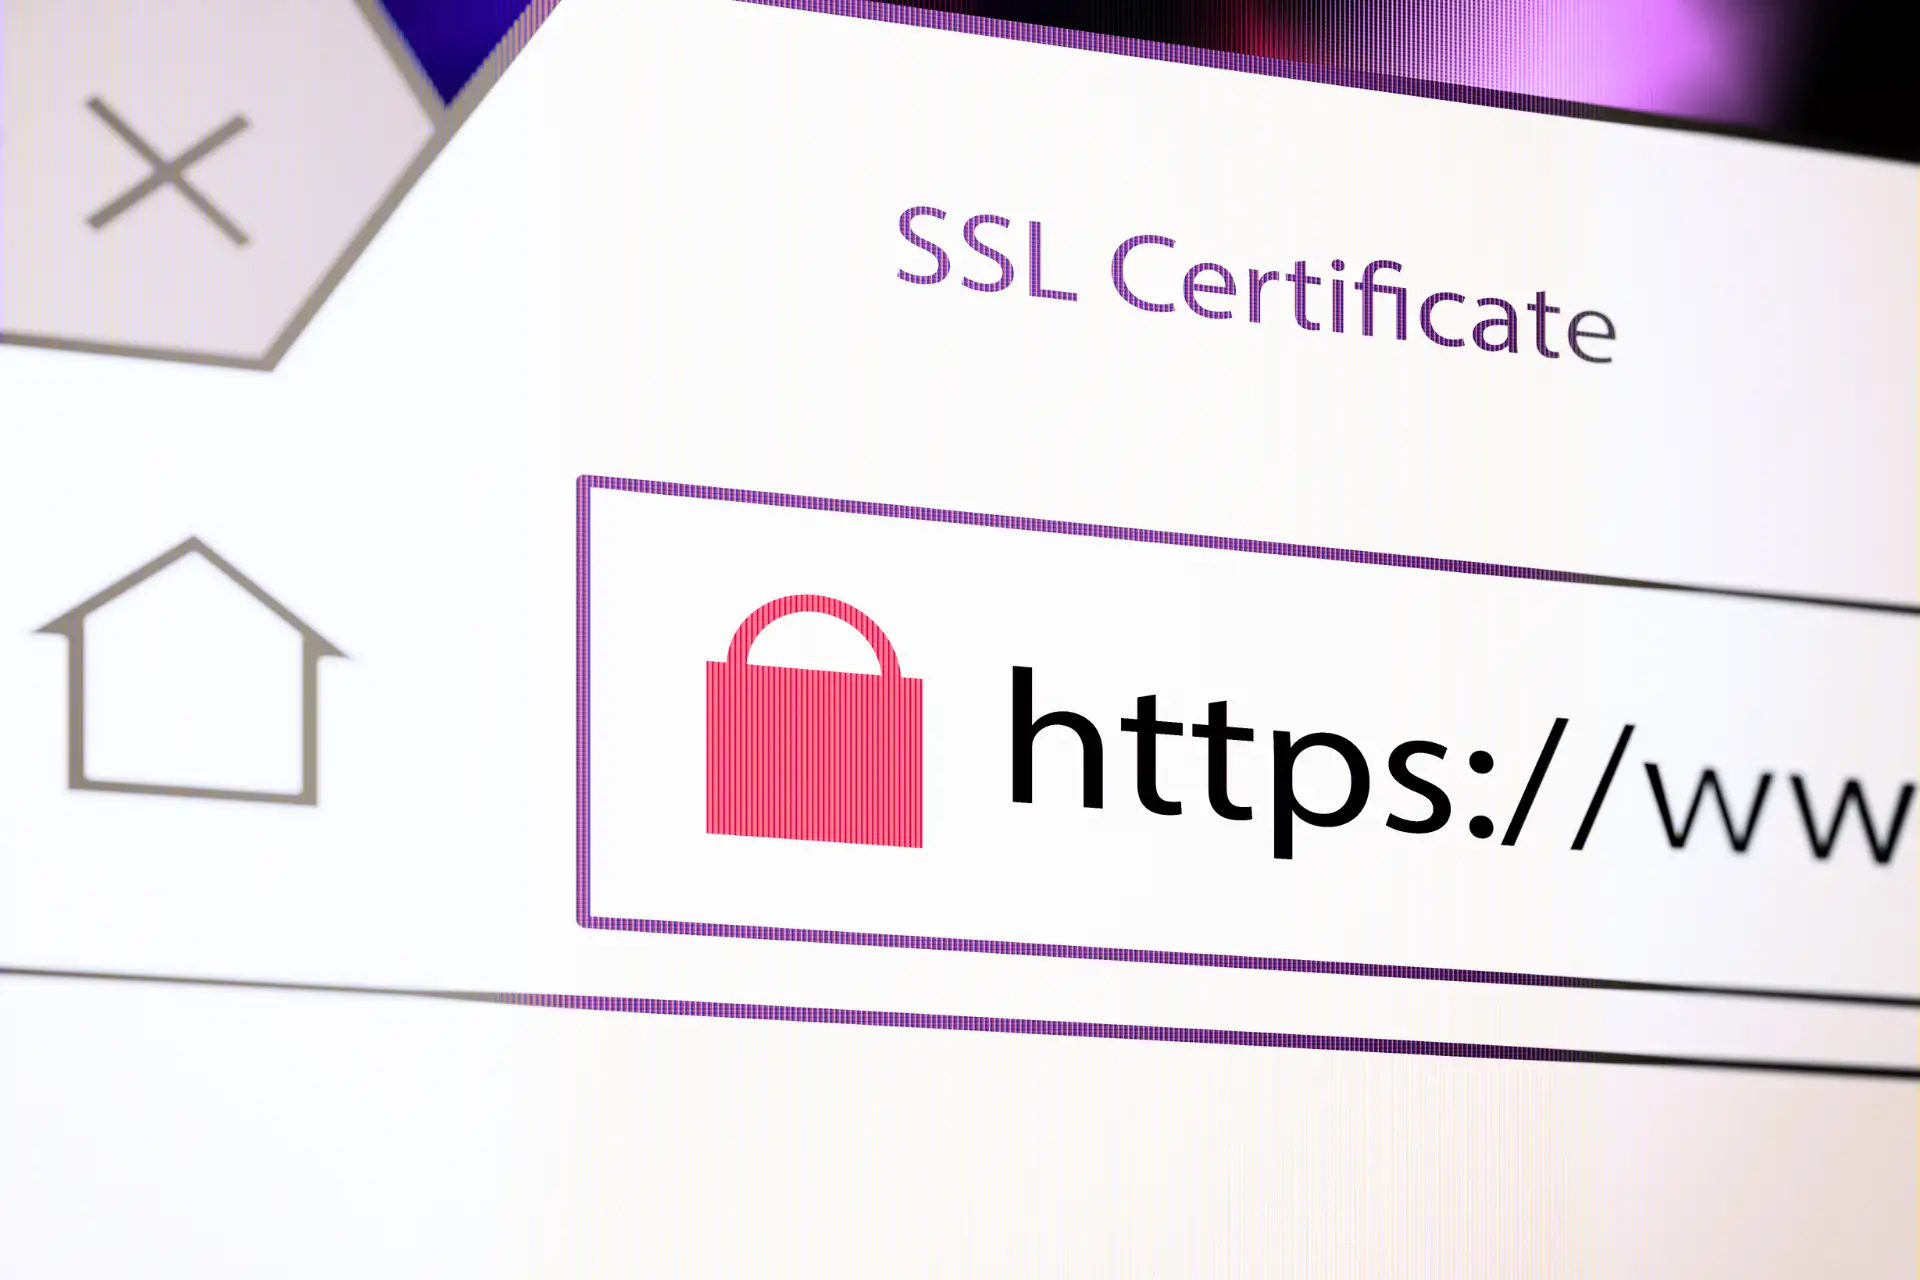 WordPress security - SSL Certificate - Lock on browser bar showing SSL encryption